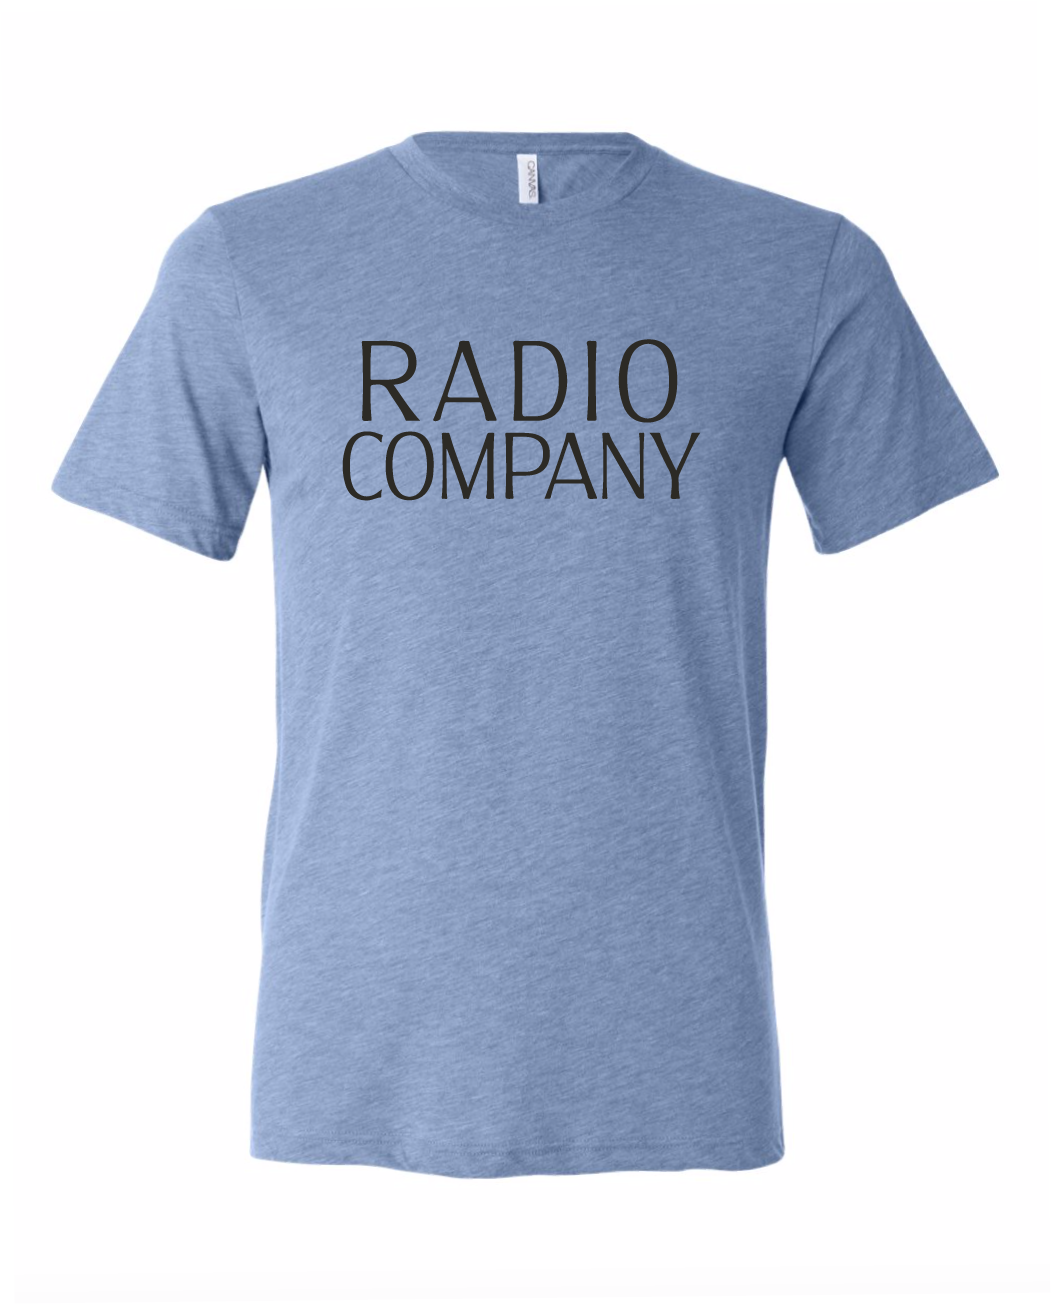 Radio Company Blue Tee